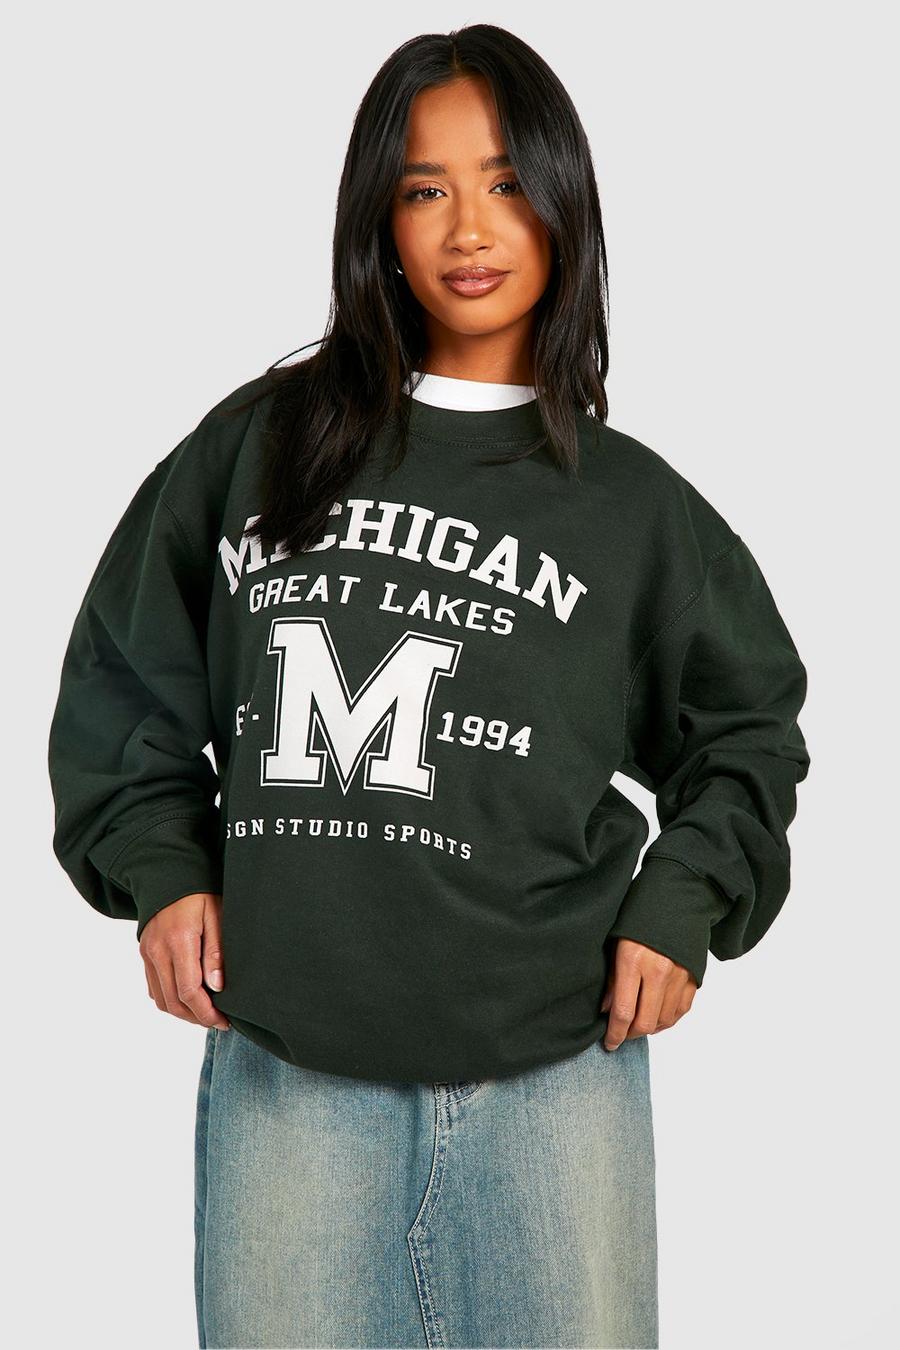 Forest Petite Michigan Slogan Varisty Printed Oversized Sweatshirt